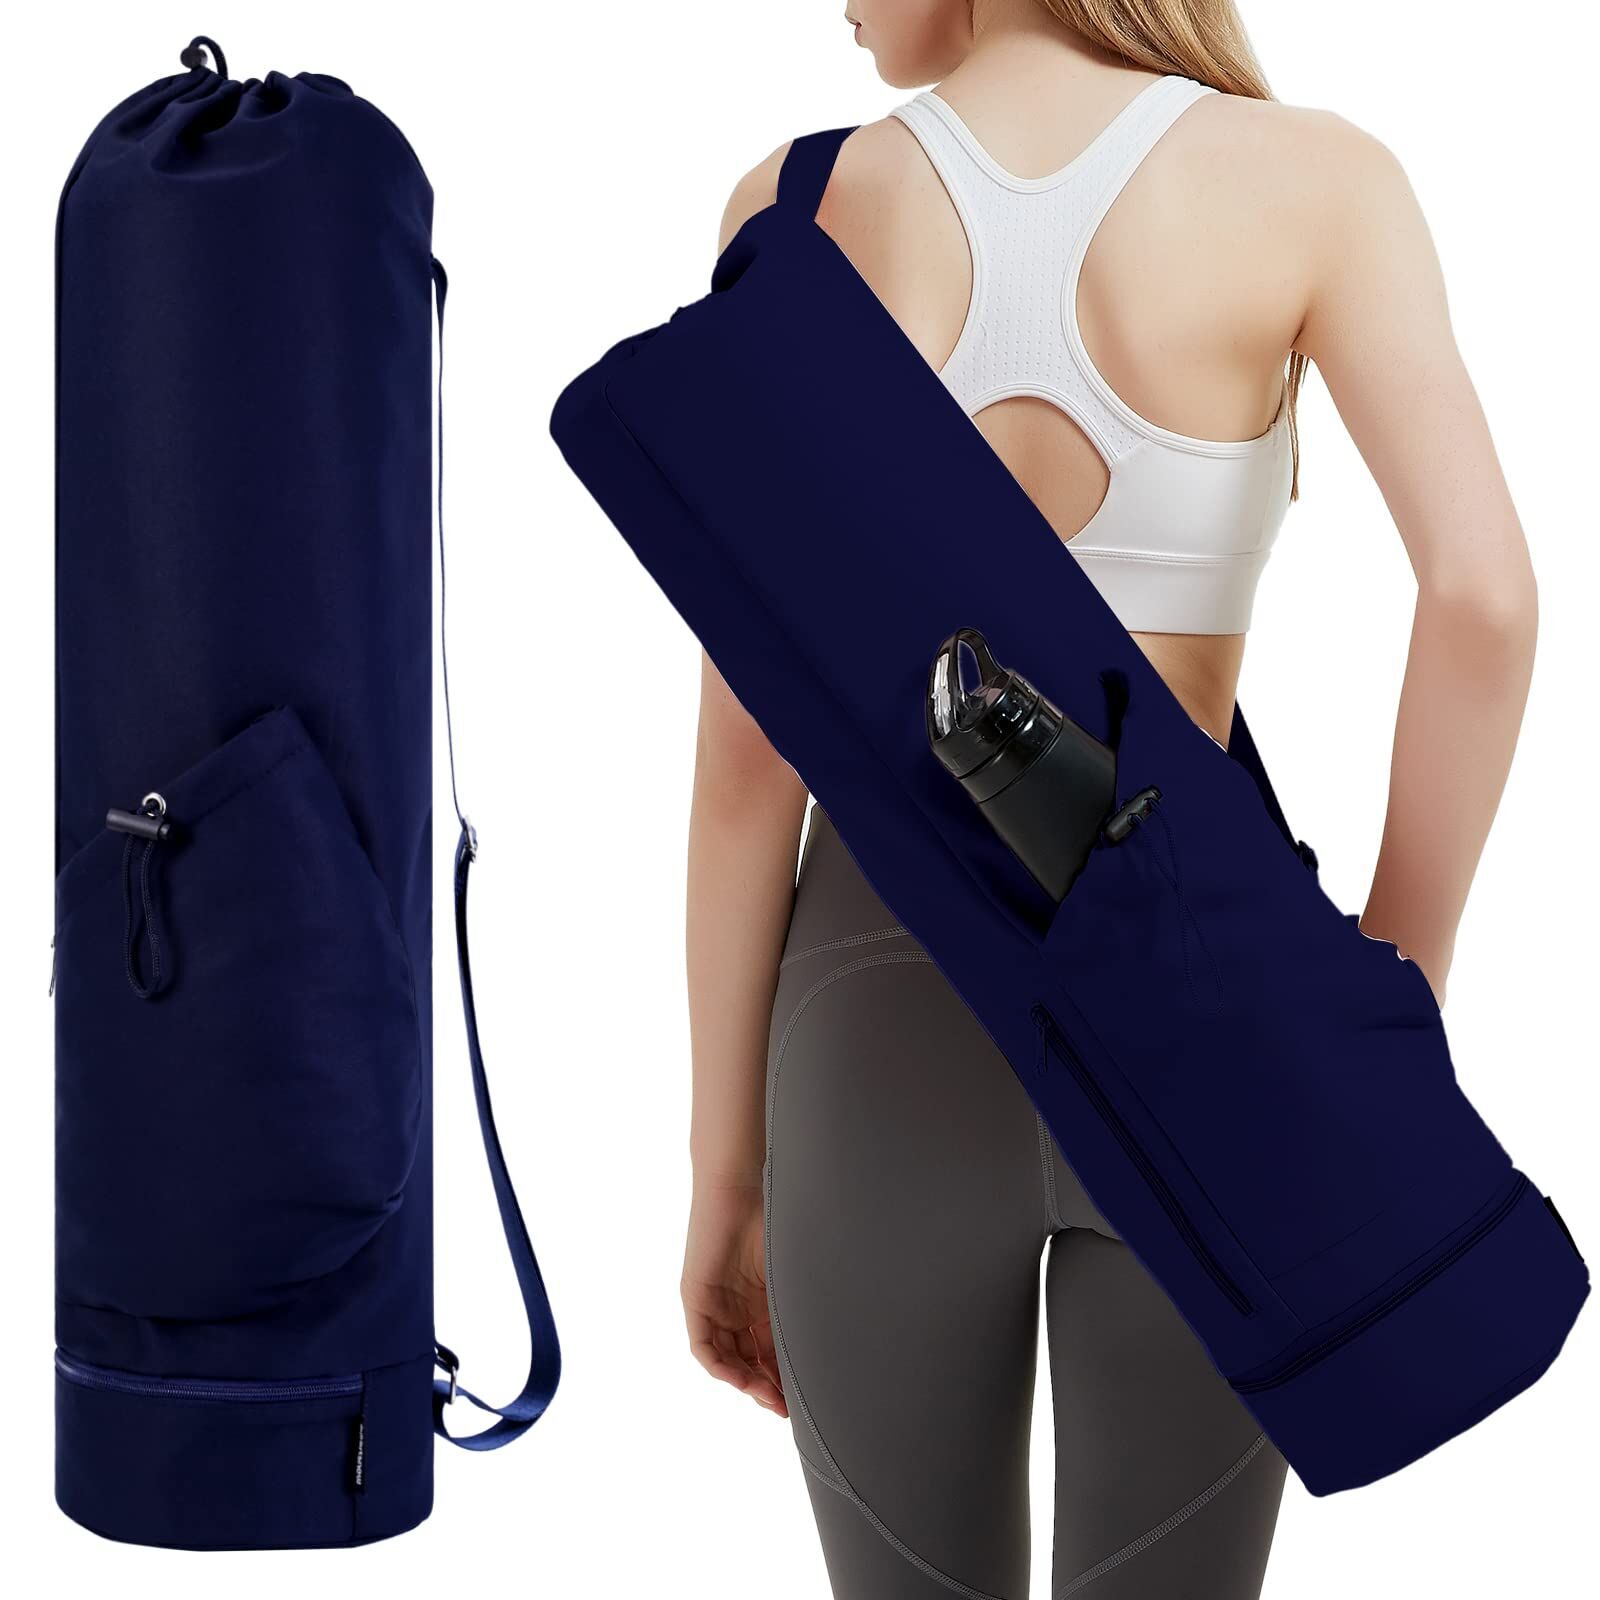  Yoga Mat Bag Large Yoga Mat Bags For Women & Men Fits Thick  Yoga Mat & Yoga Accessories Three Storage Pocket Adjustable Yoga Bag  Shoulder Strap Great As Gym Bag